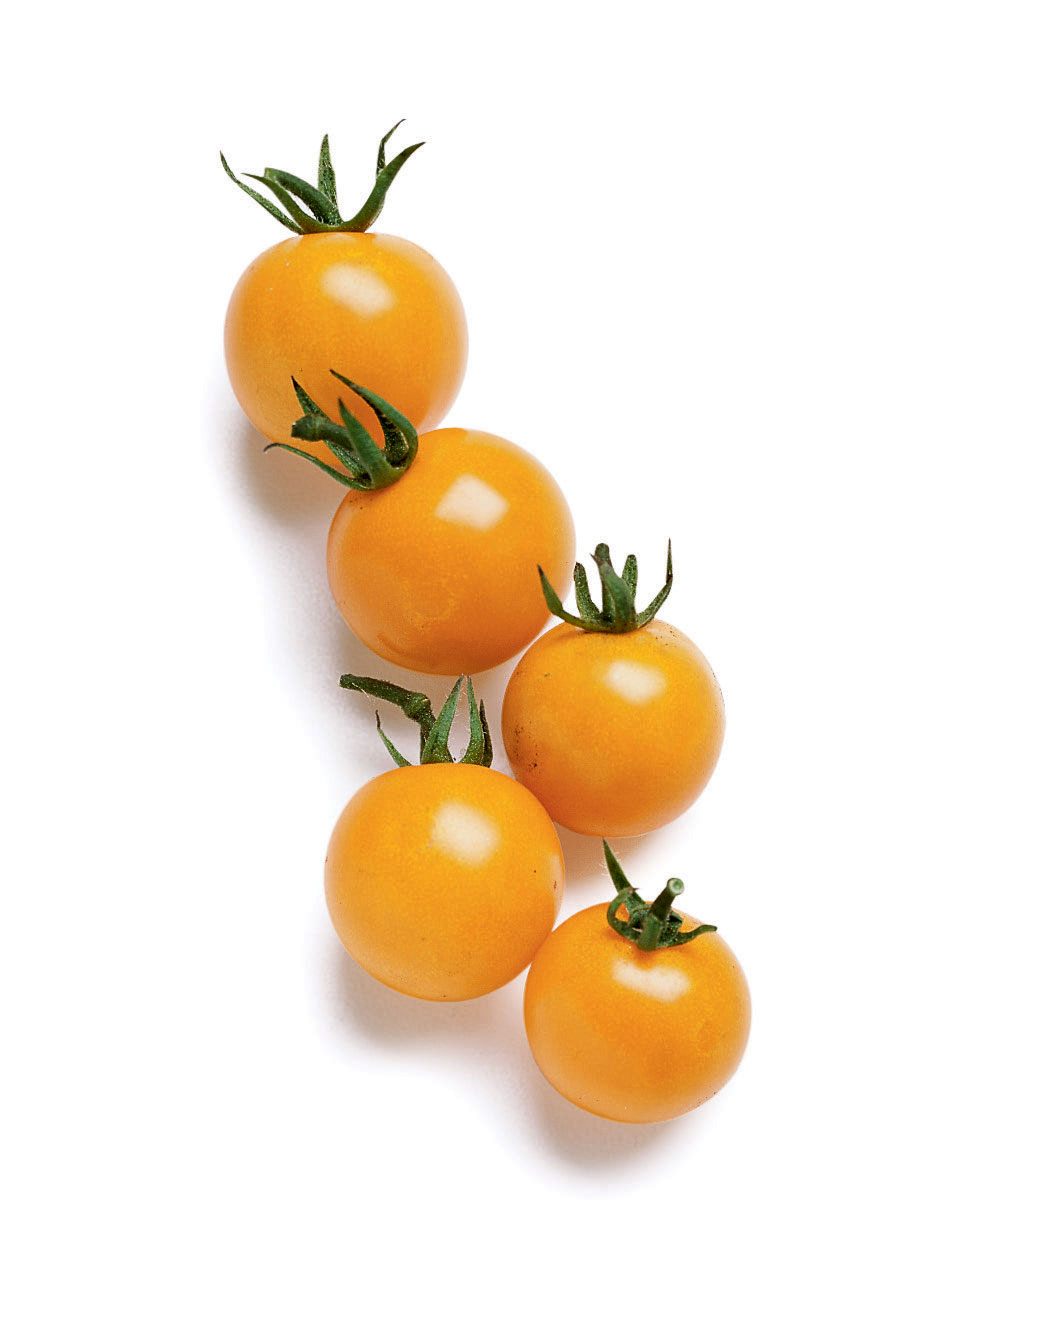 Your perfect tomato